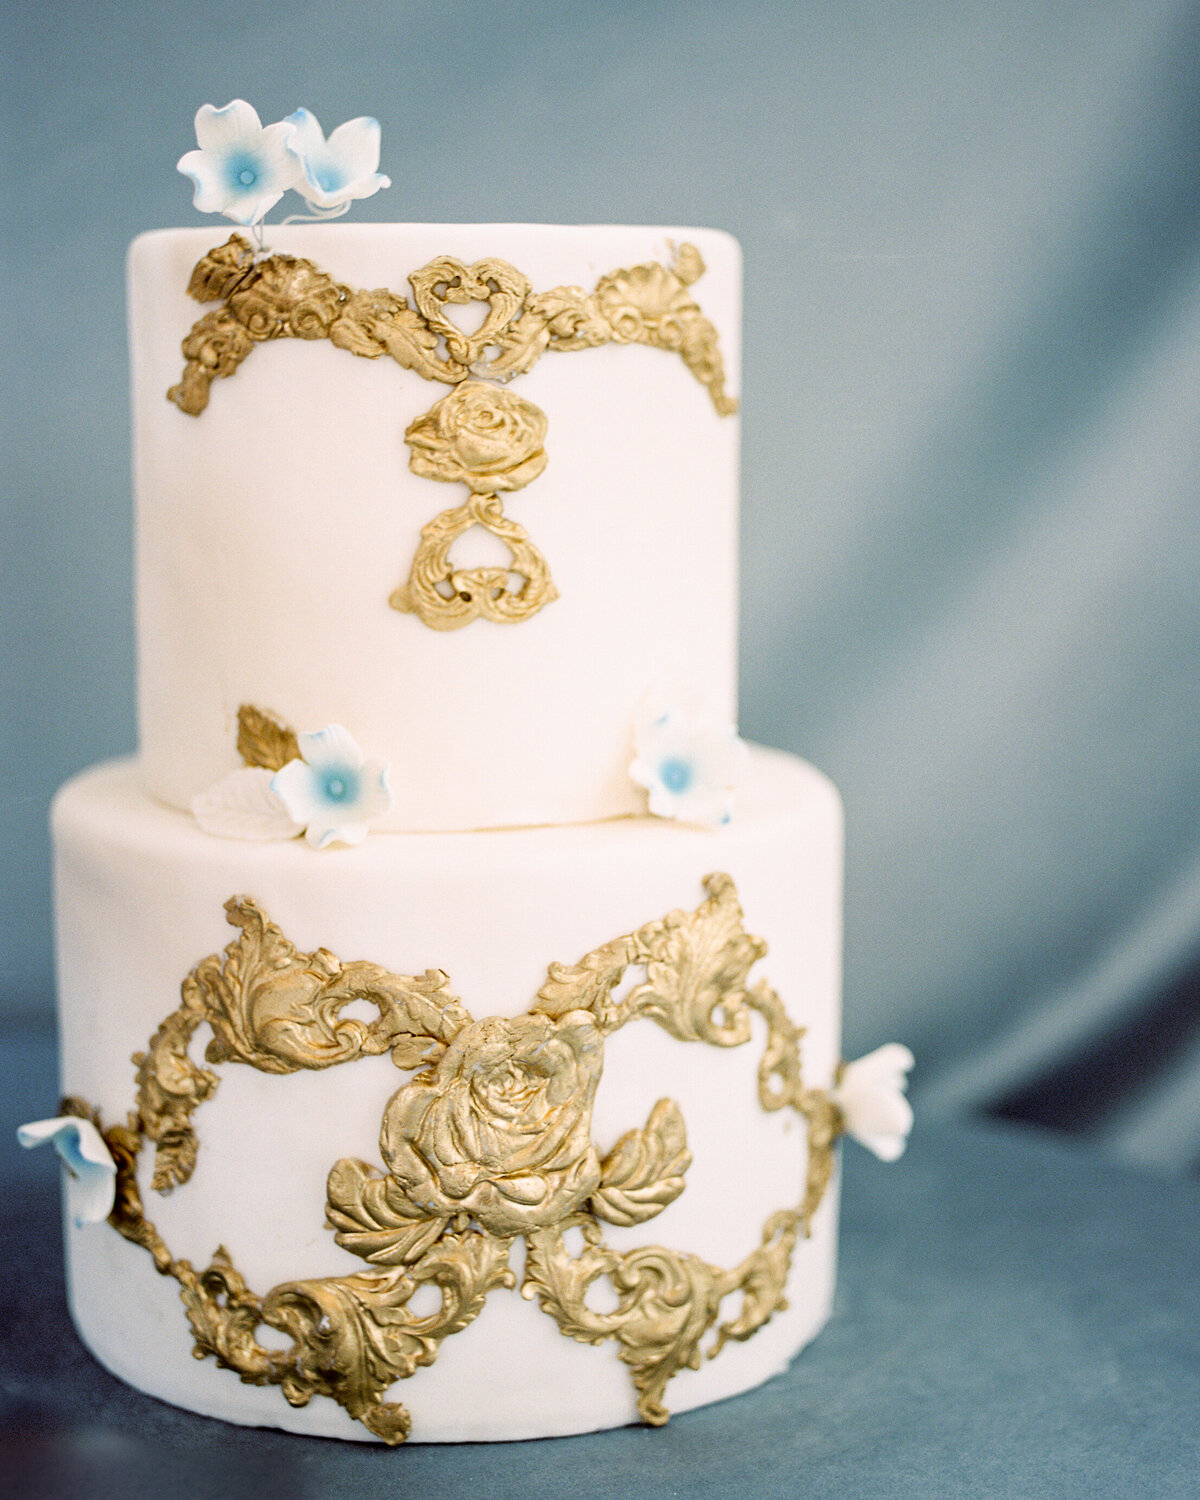 Cake with golden details on a blue velvet background